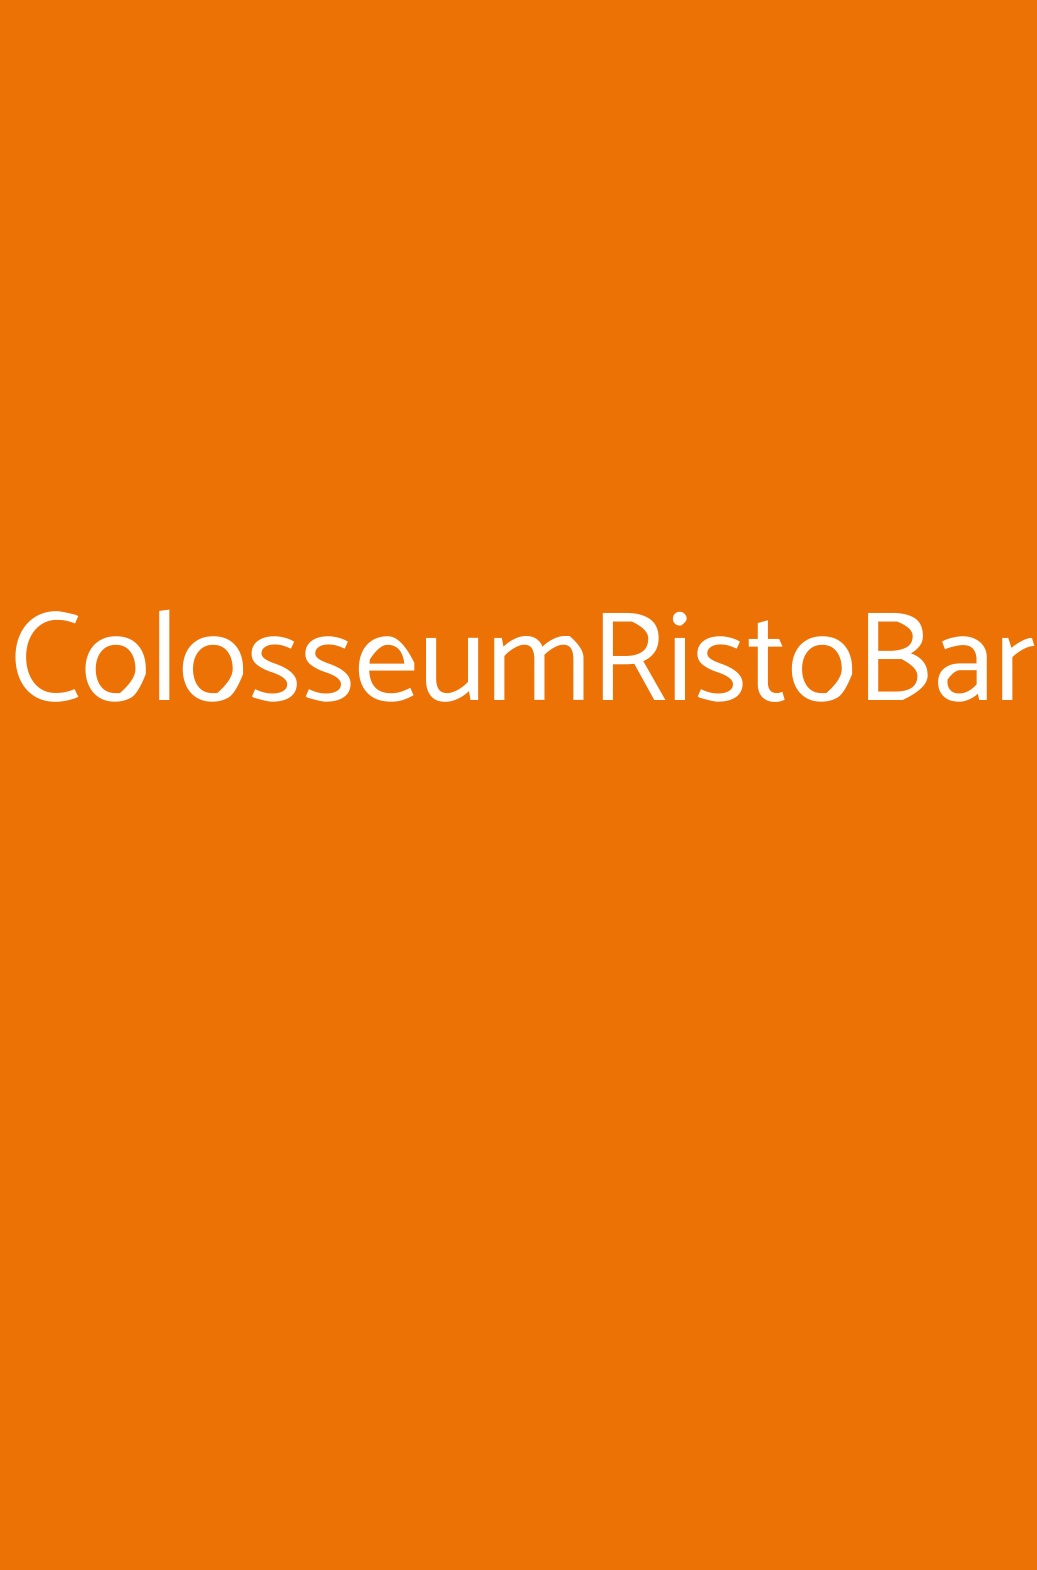 ColosseumRistoBar Roma menù 1 pagina